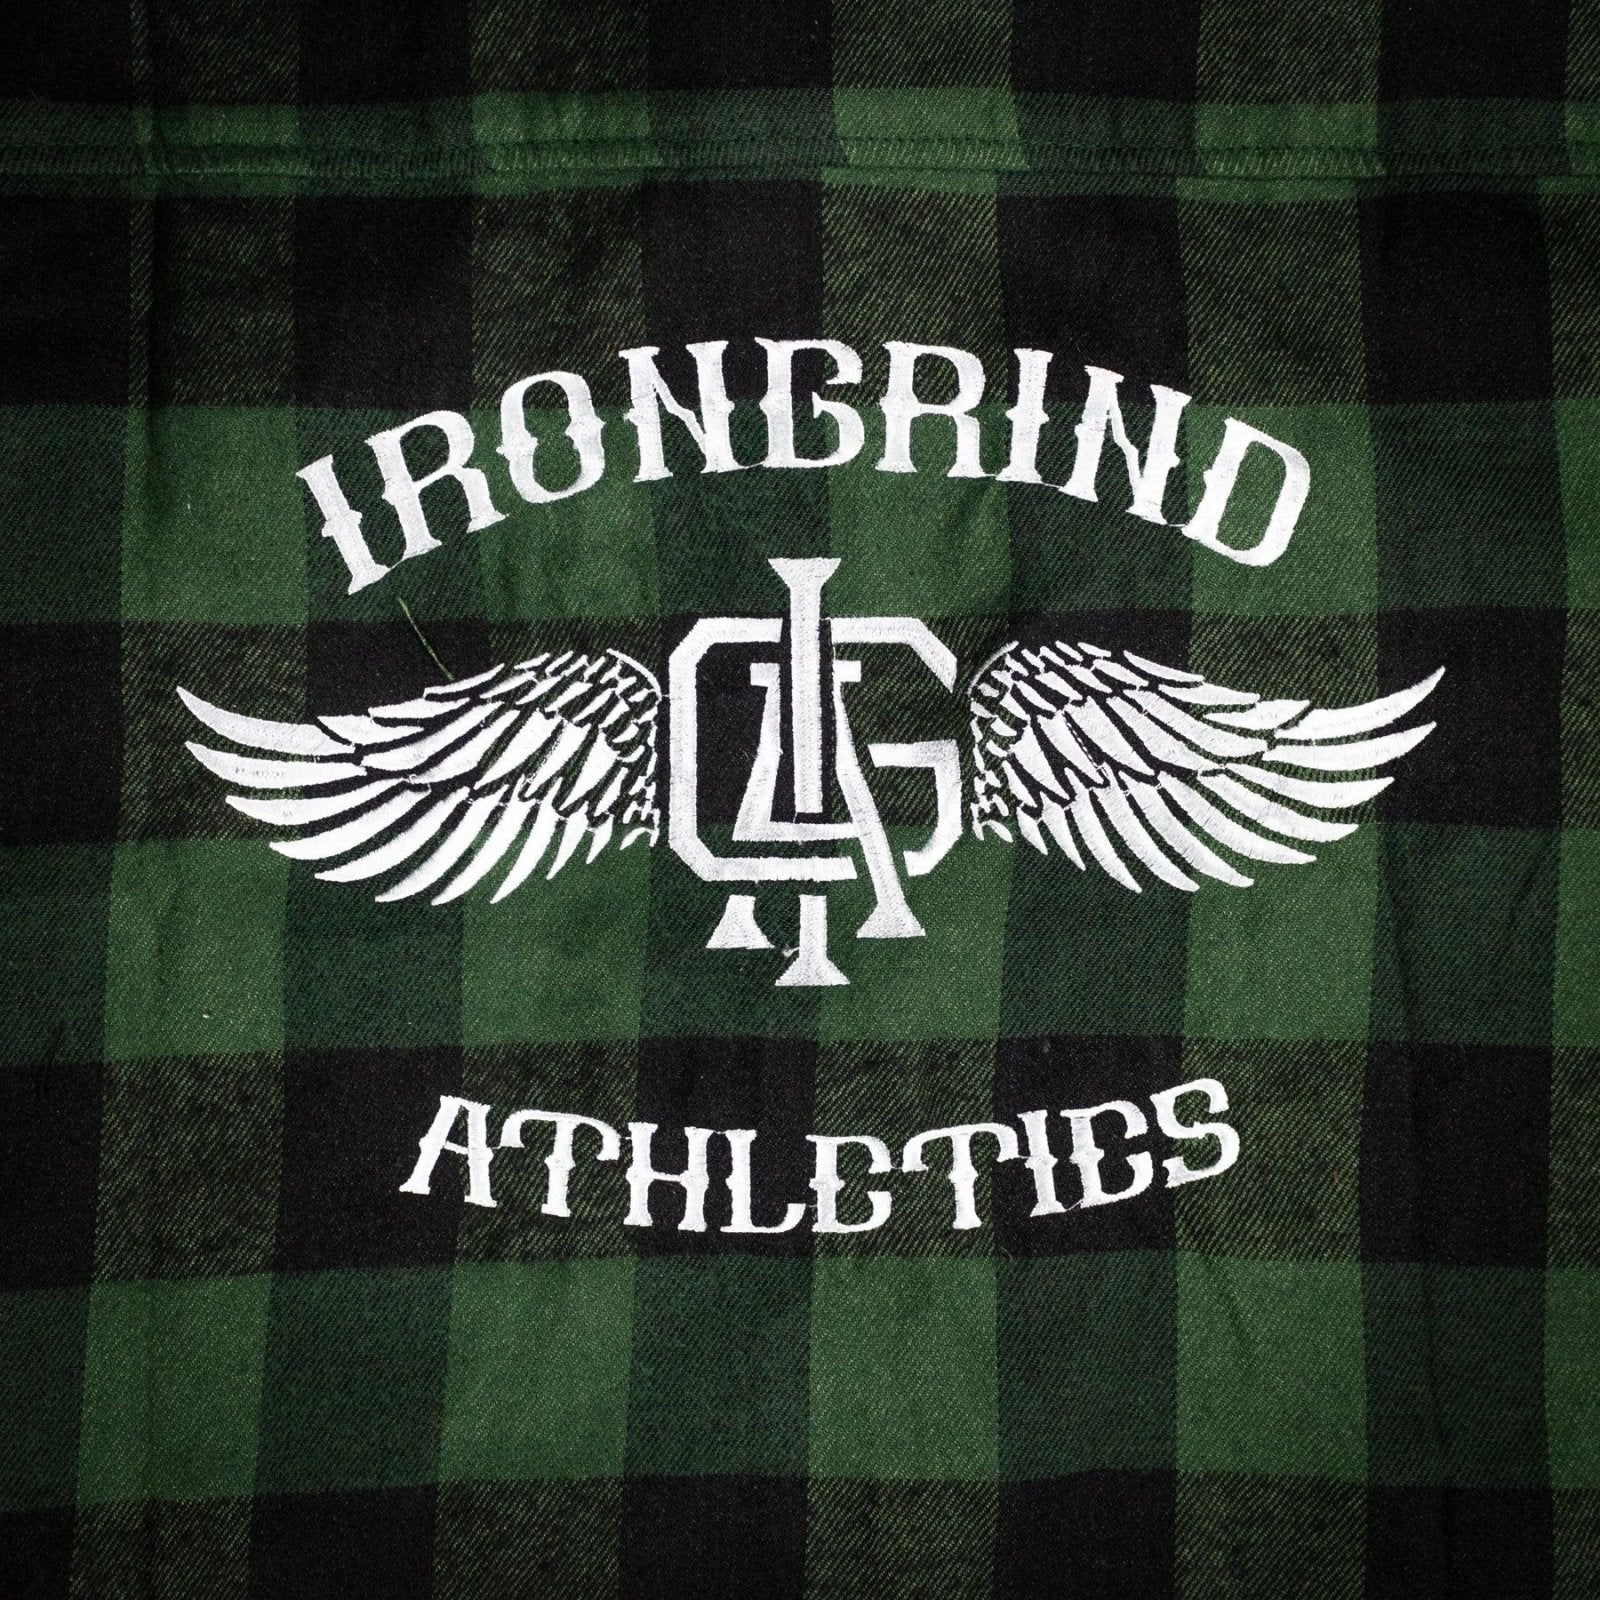 Triumph Flannel - IronGrind Athletics - activewear - gymshark - alphalete